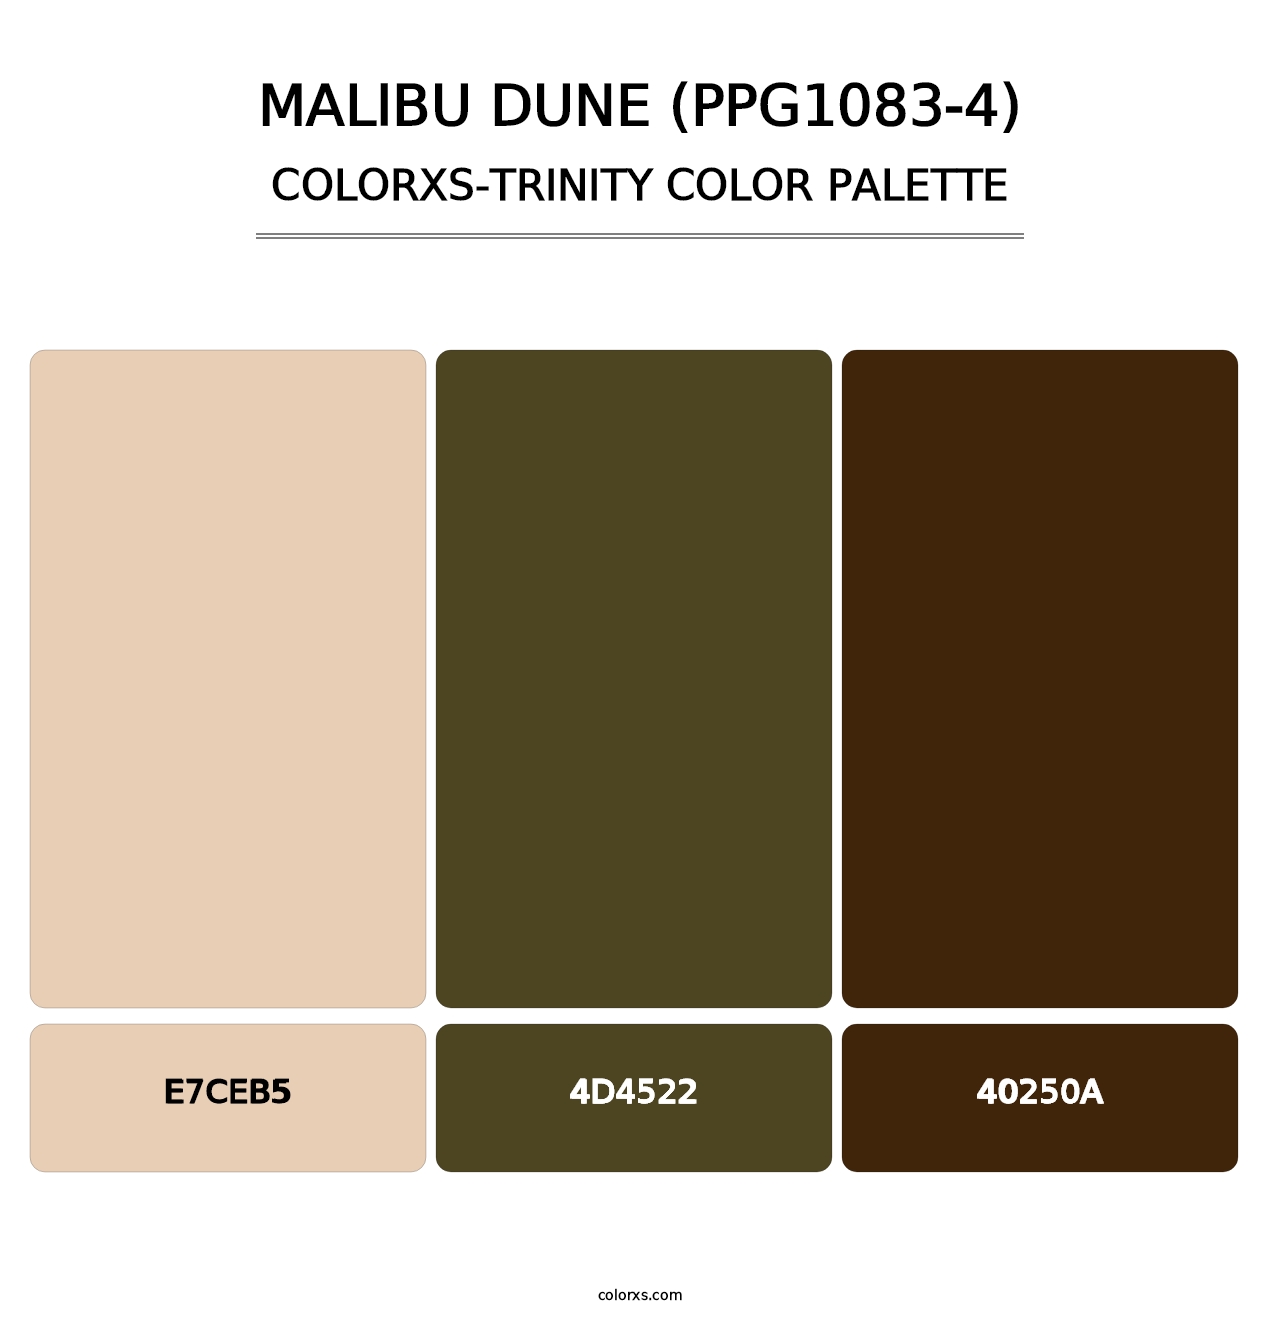 Malibu Dune (PPG1083-4) - Colorxs Trinity Palette